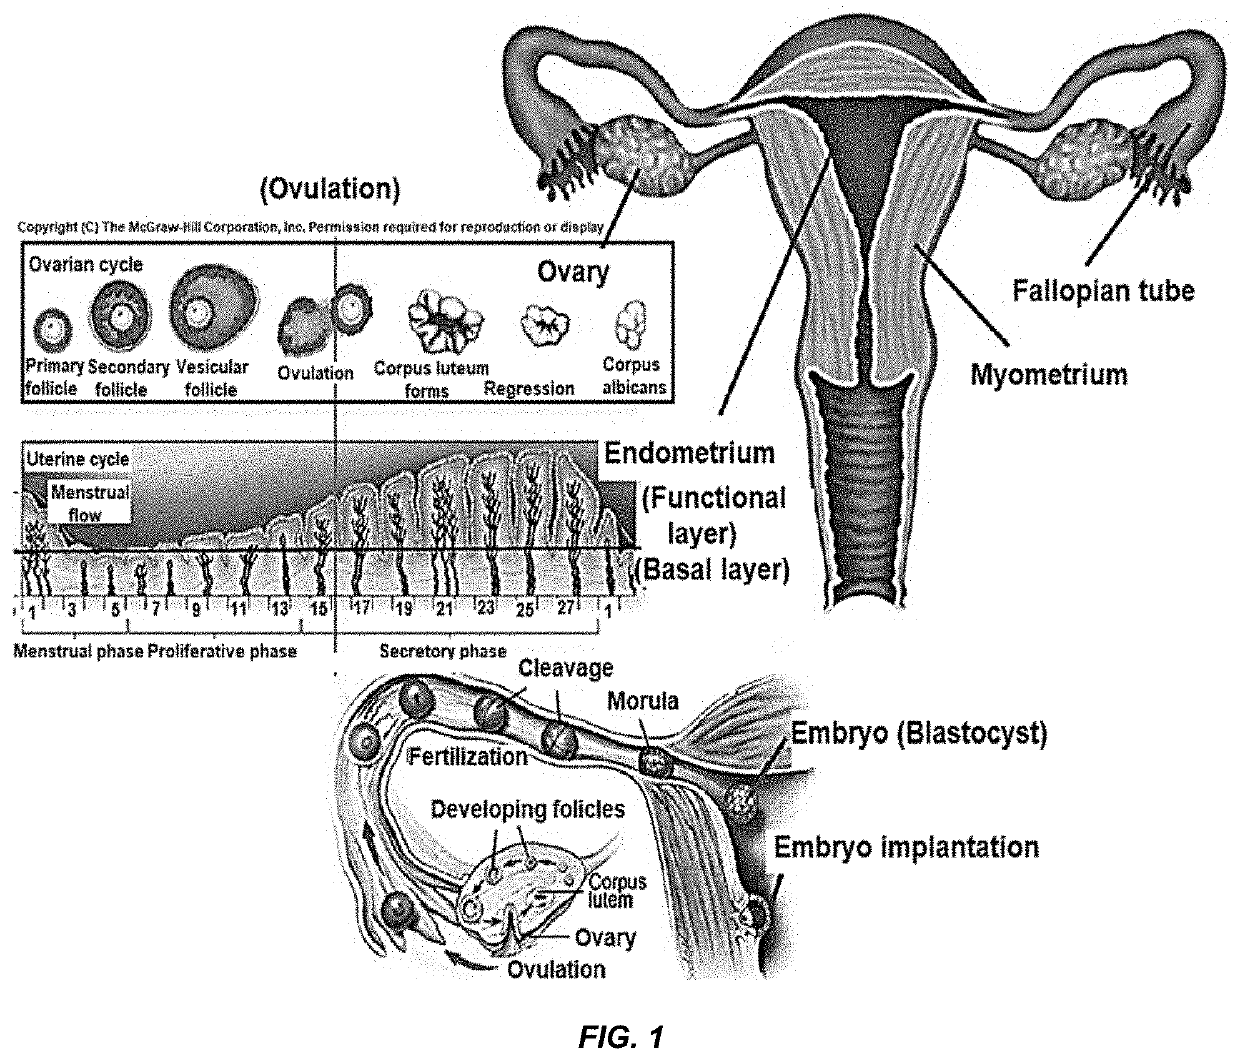 Diagnostic and treatment method for endometrial cavity distorting uterine leiomyoma using microrna